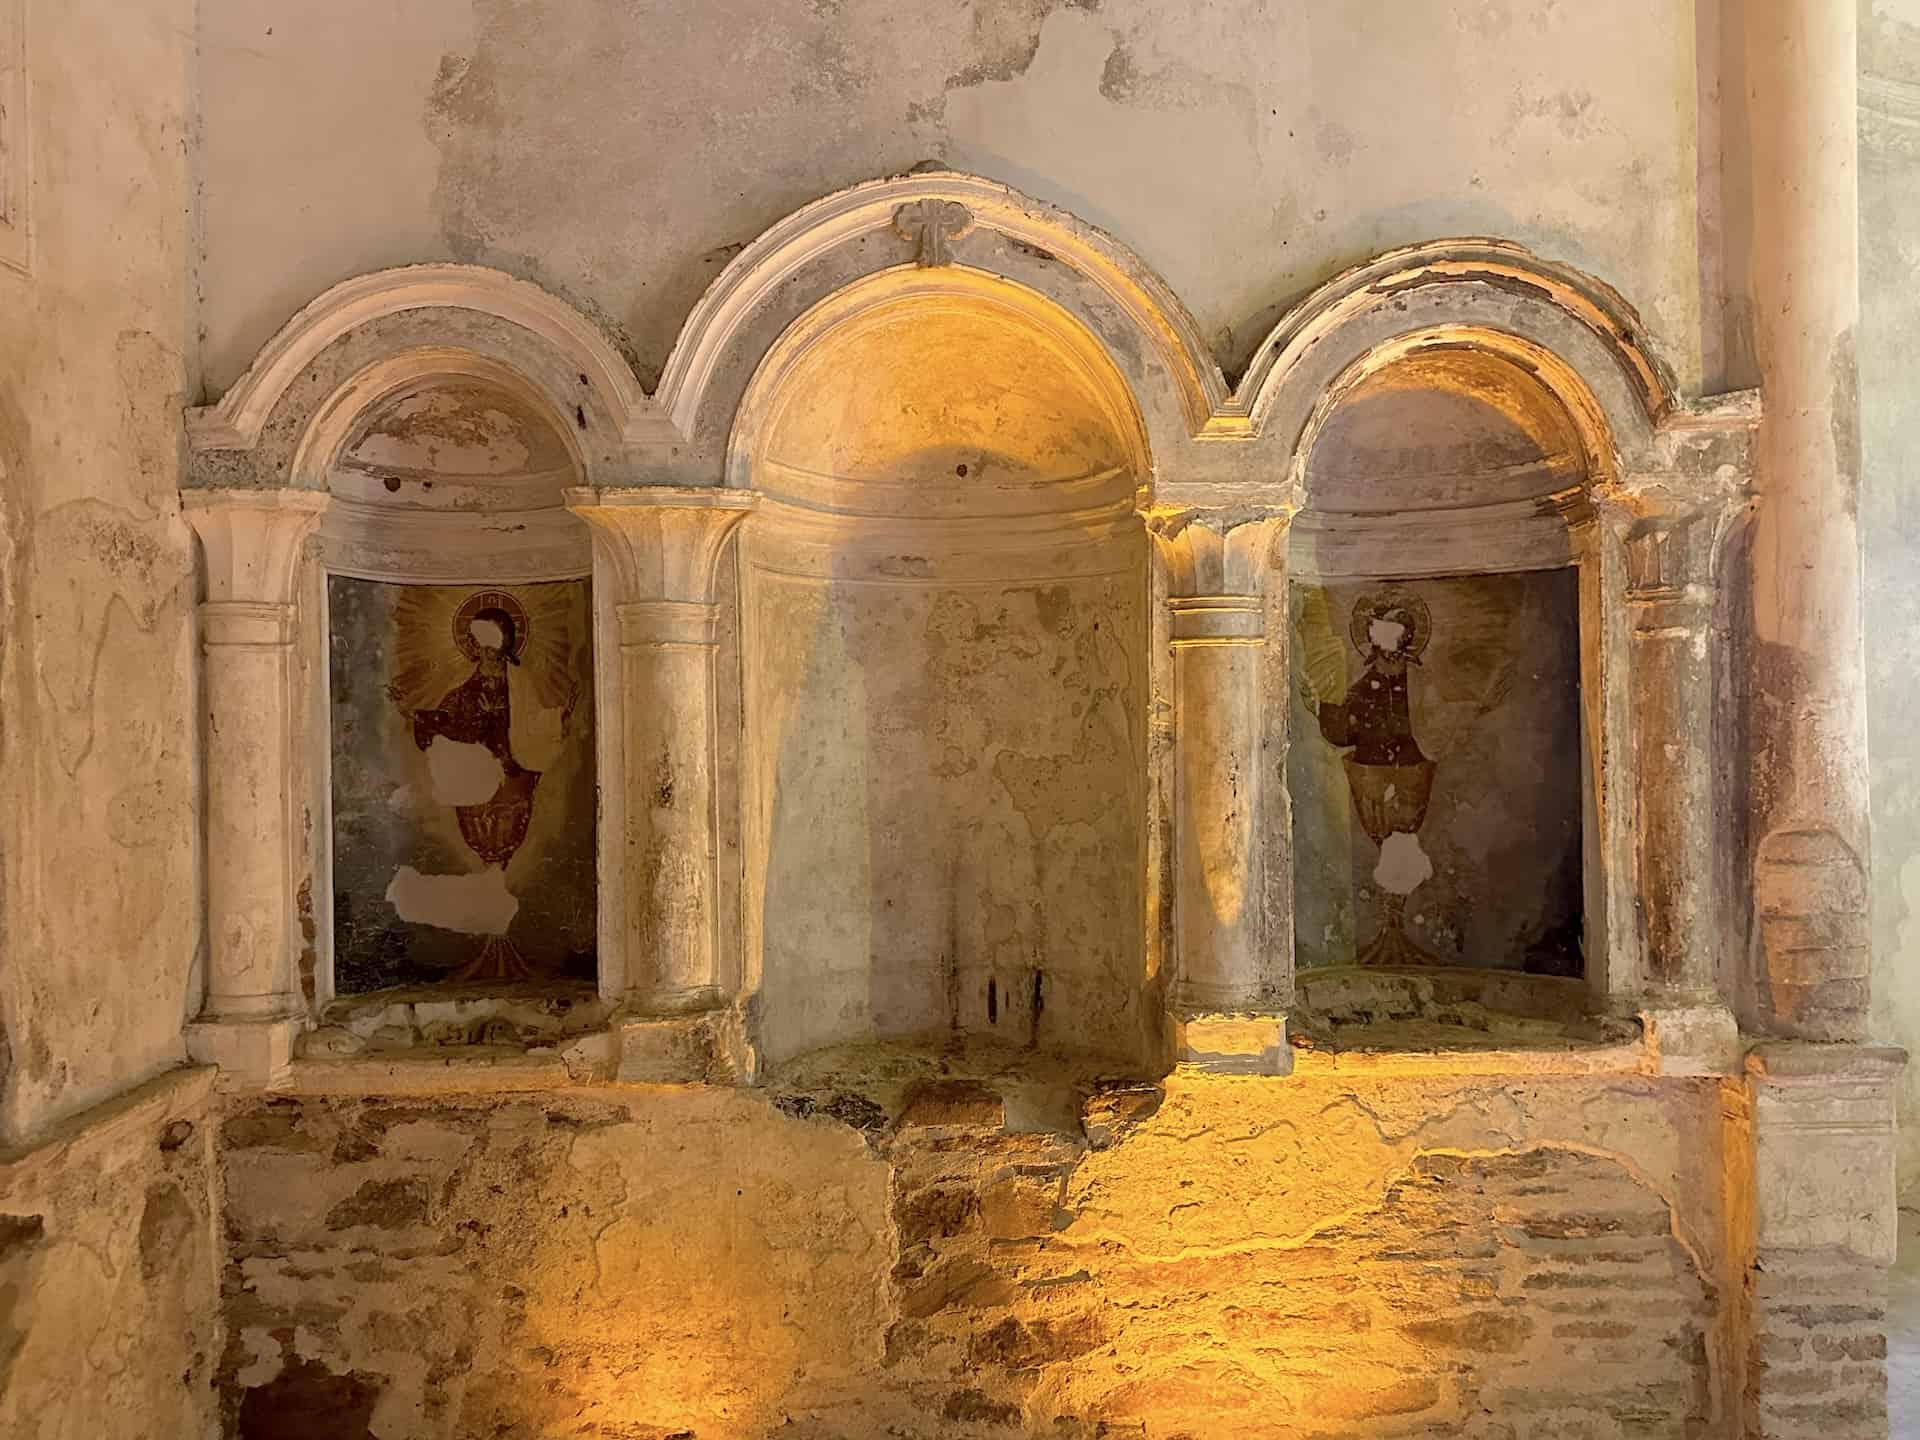 Northeast niches at the Church of St. John the Baptist in Şirince, Turkey